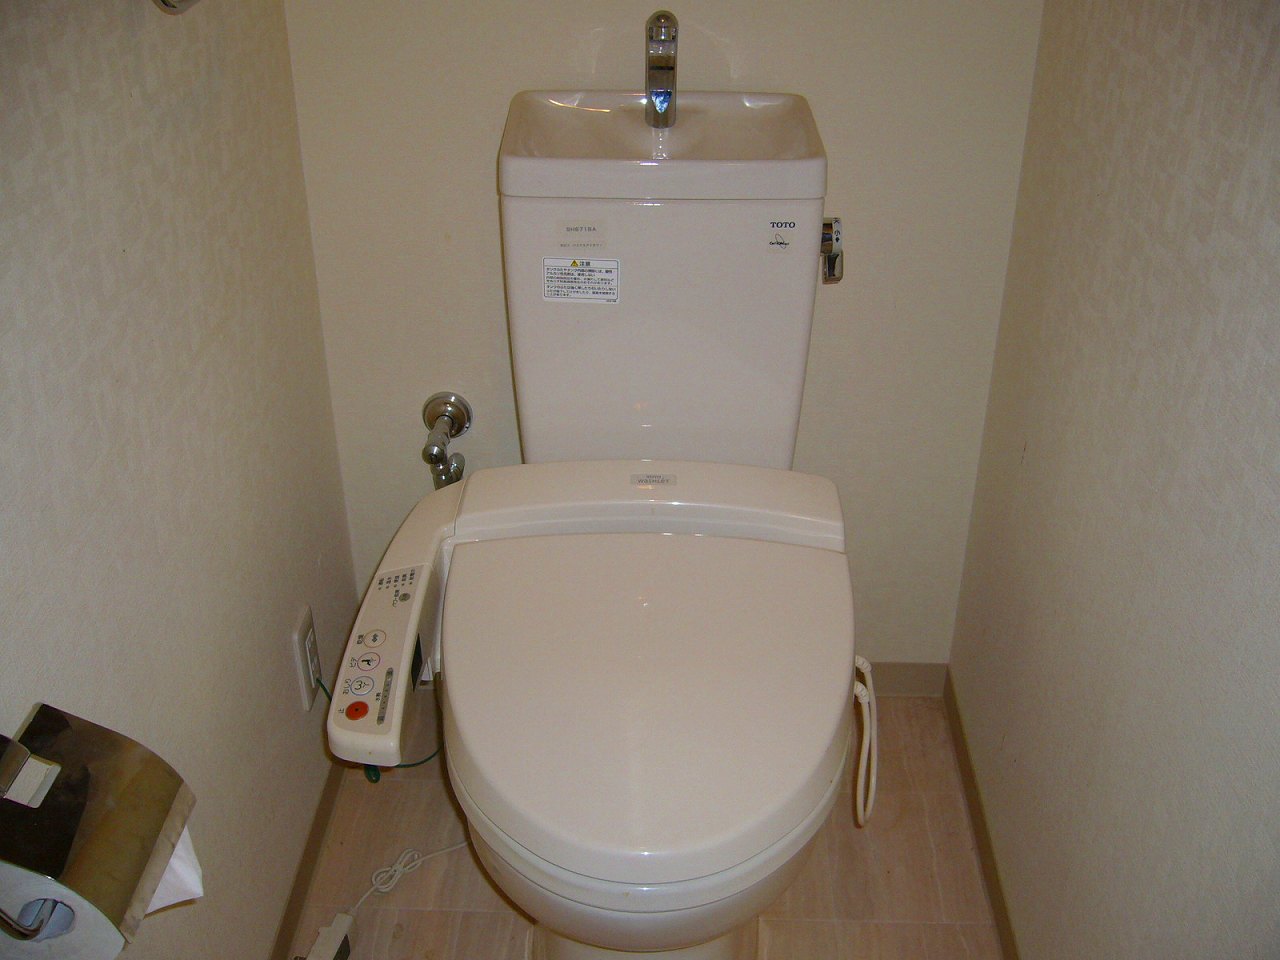 Toilet. Of the margin is wide